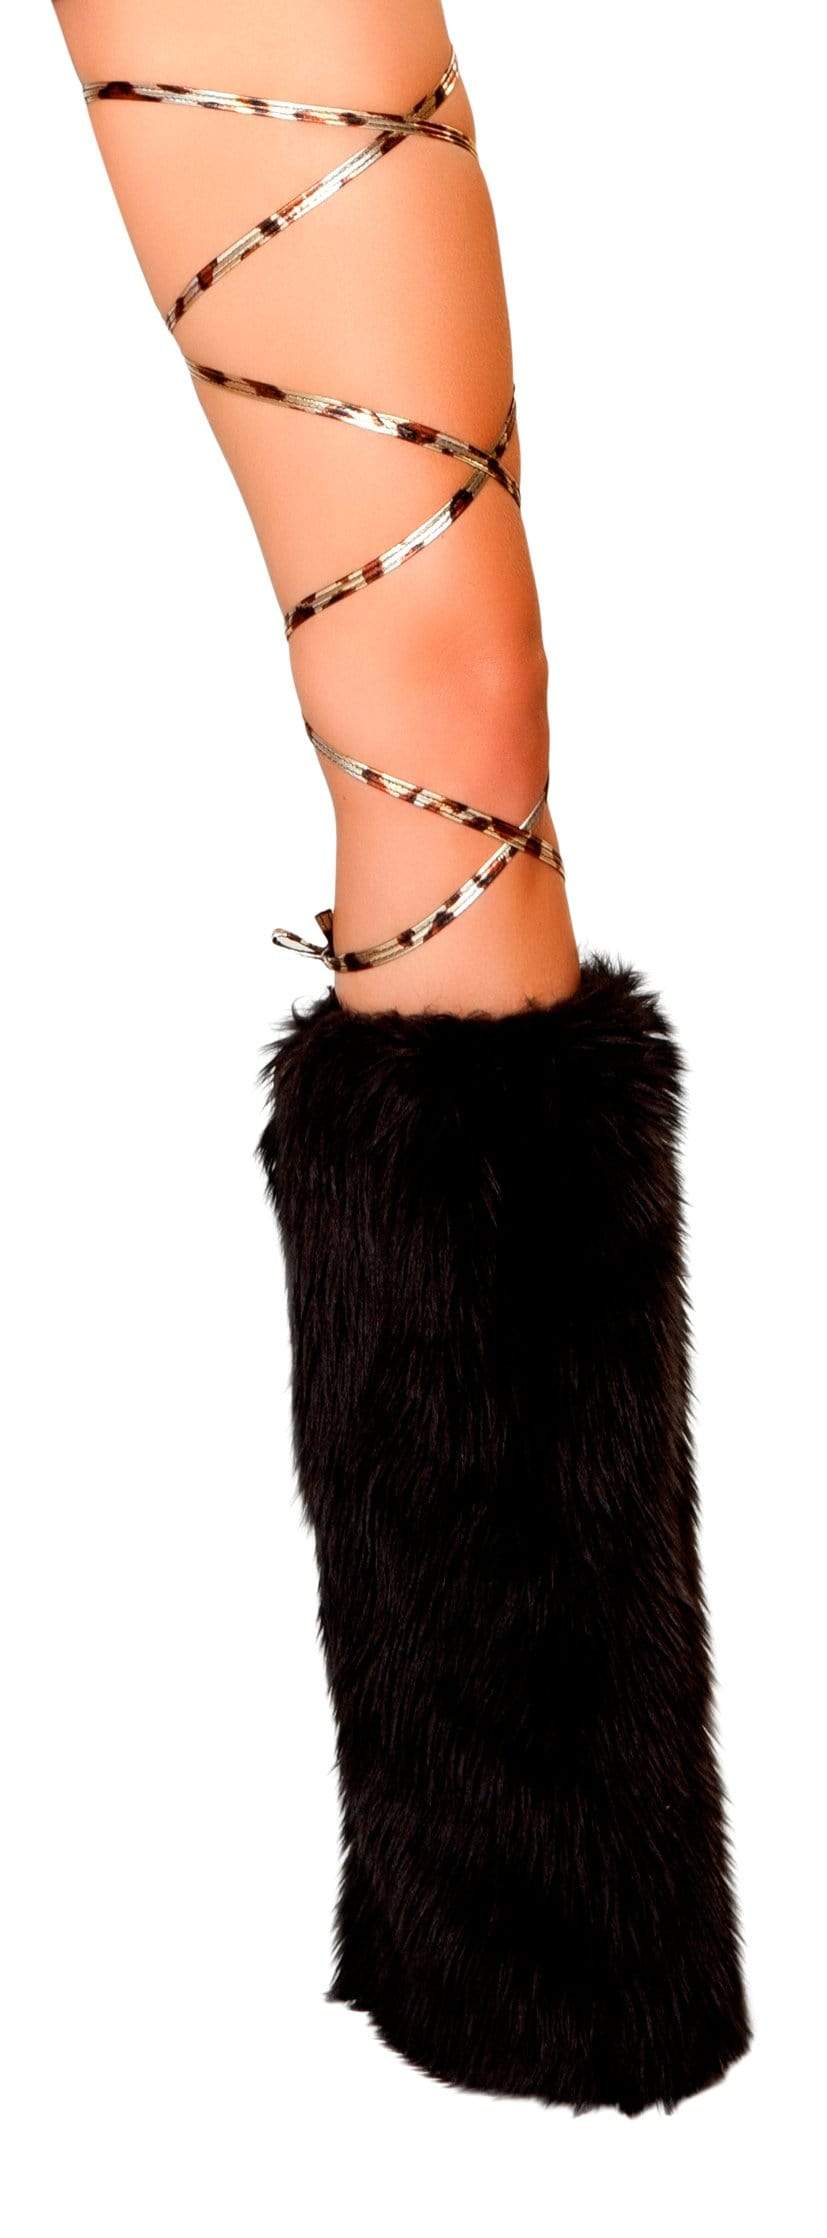 Roma ONE SIZE / PRINT Brown Leopard Print Metallic Thigh Leg Wraps EDM Dance Rave Wear SHC-3020-BRWNLEOPARD-R Apparel &amp; Accessories &gt; Costumes &amp; Accessories &gt; Costumes